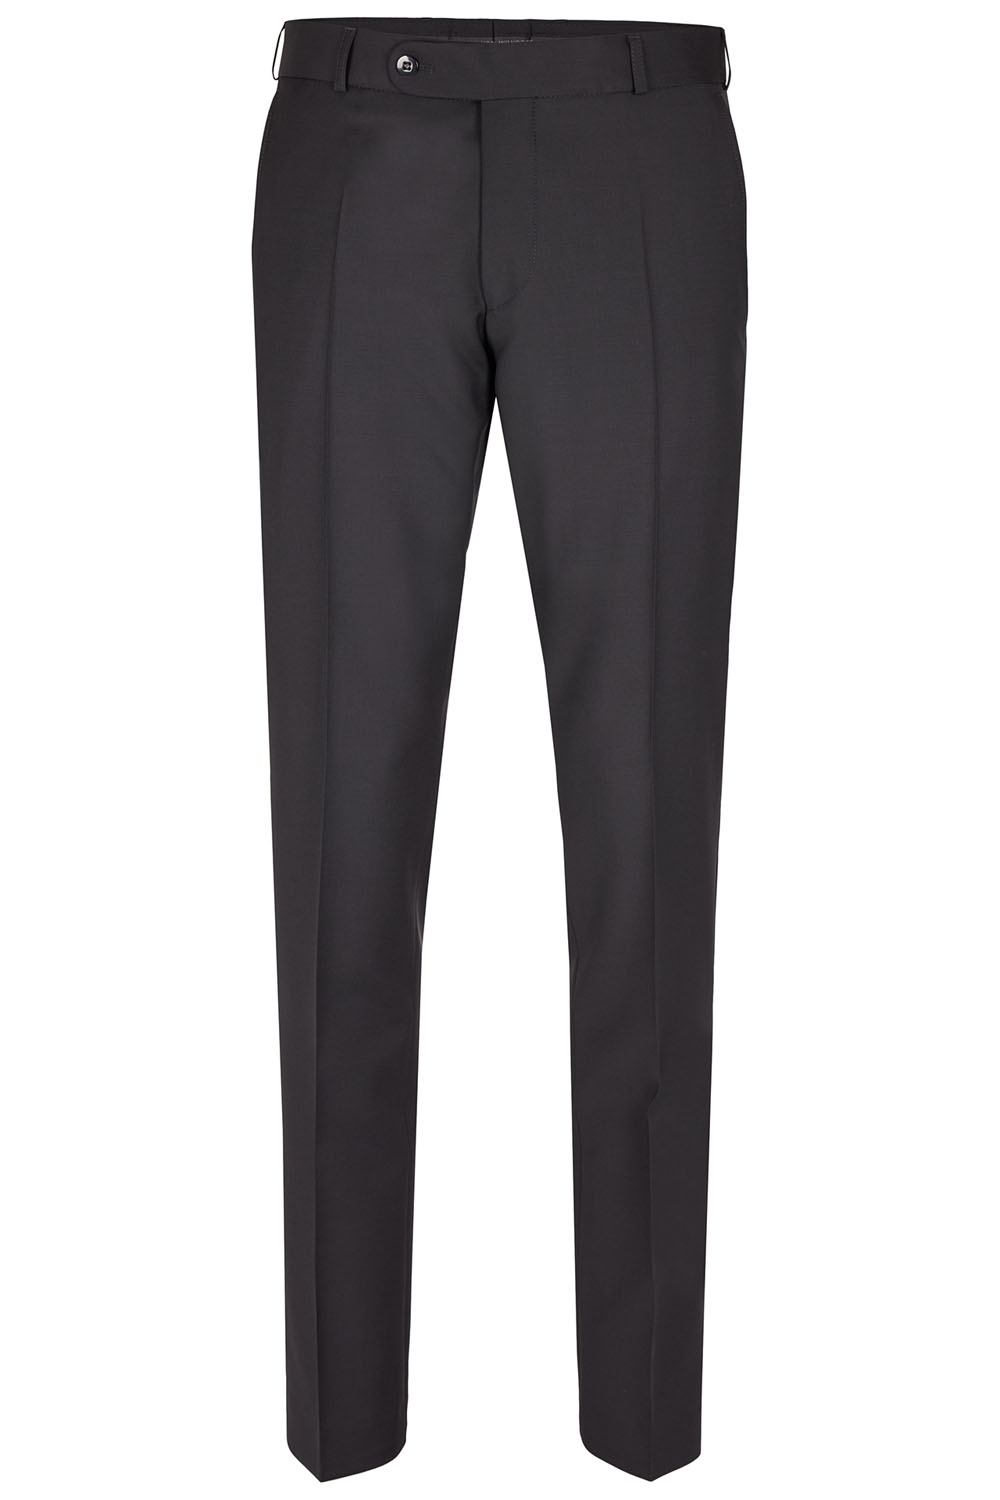 Black Slim Fit Tuxedo - Tom Murphy's Formal and Menswear